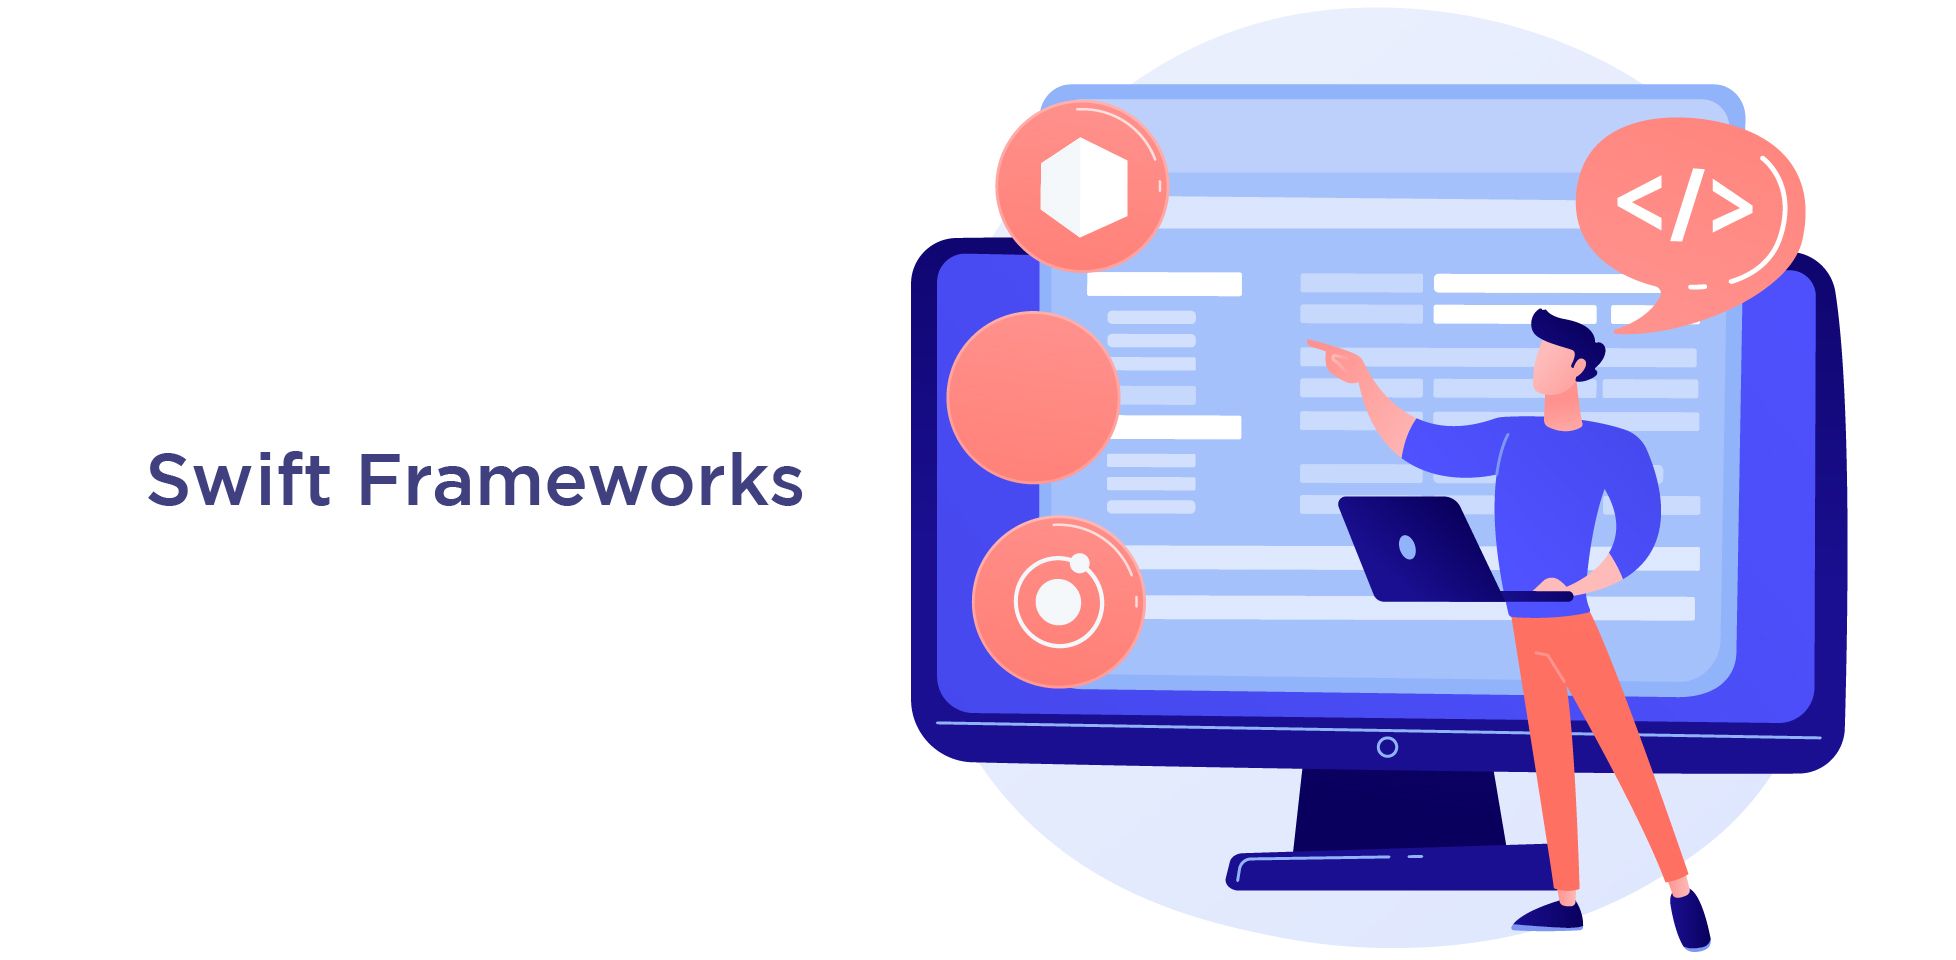 Swift Frameworks